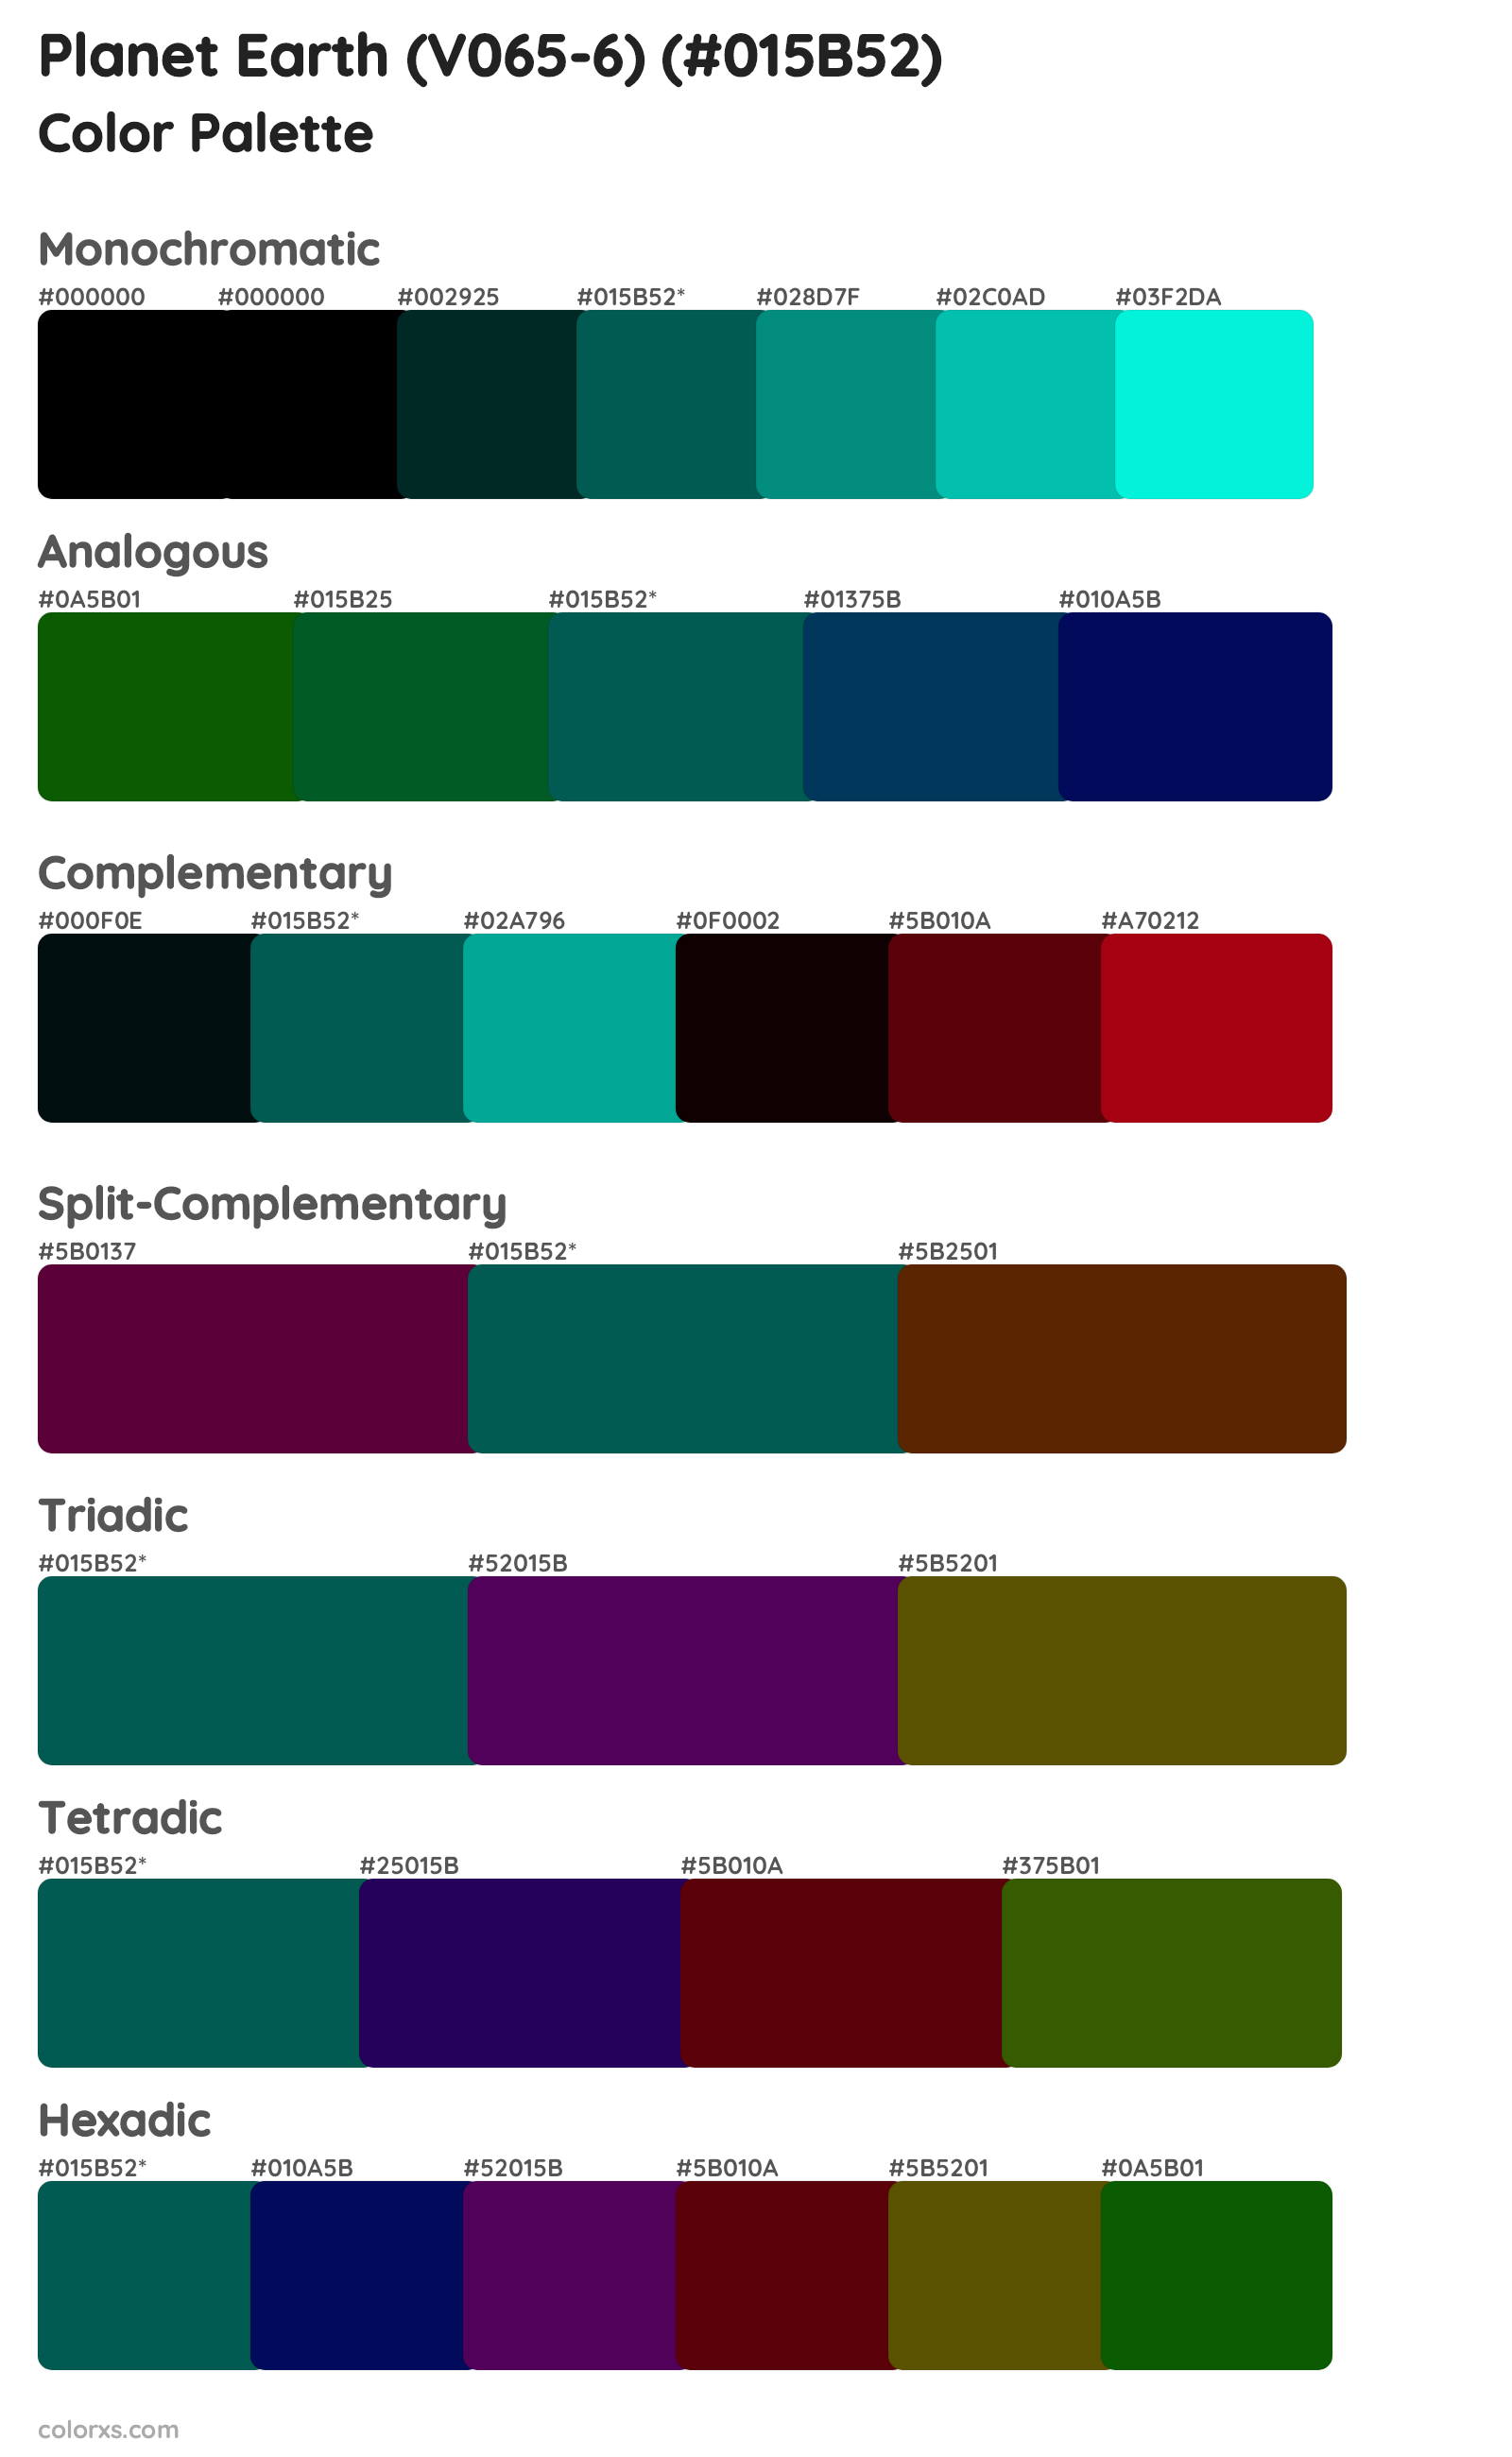 Planet Earth (V065-6) Color Scheme Palettes